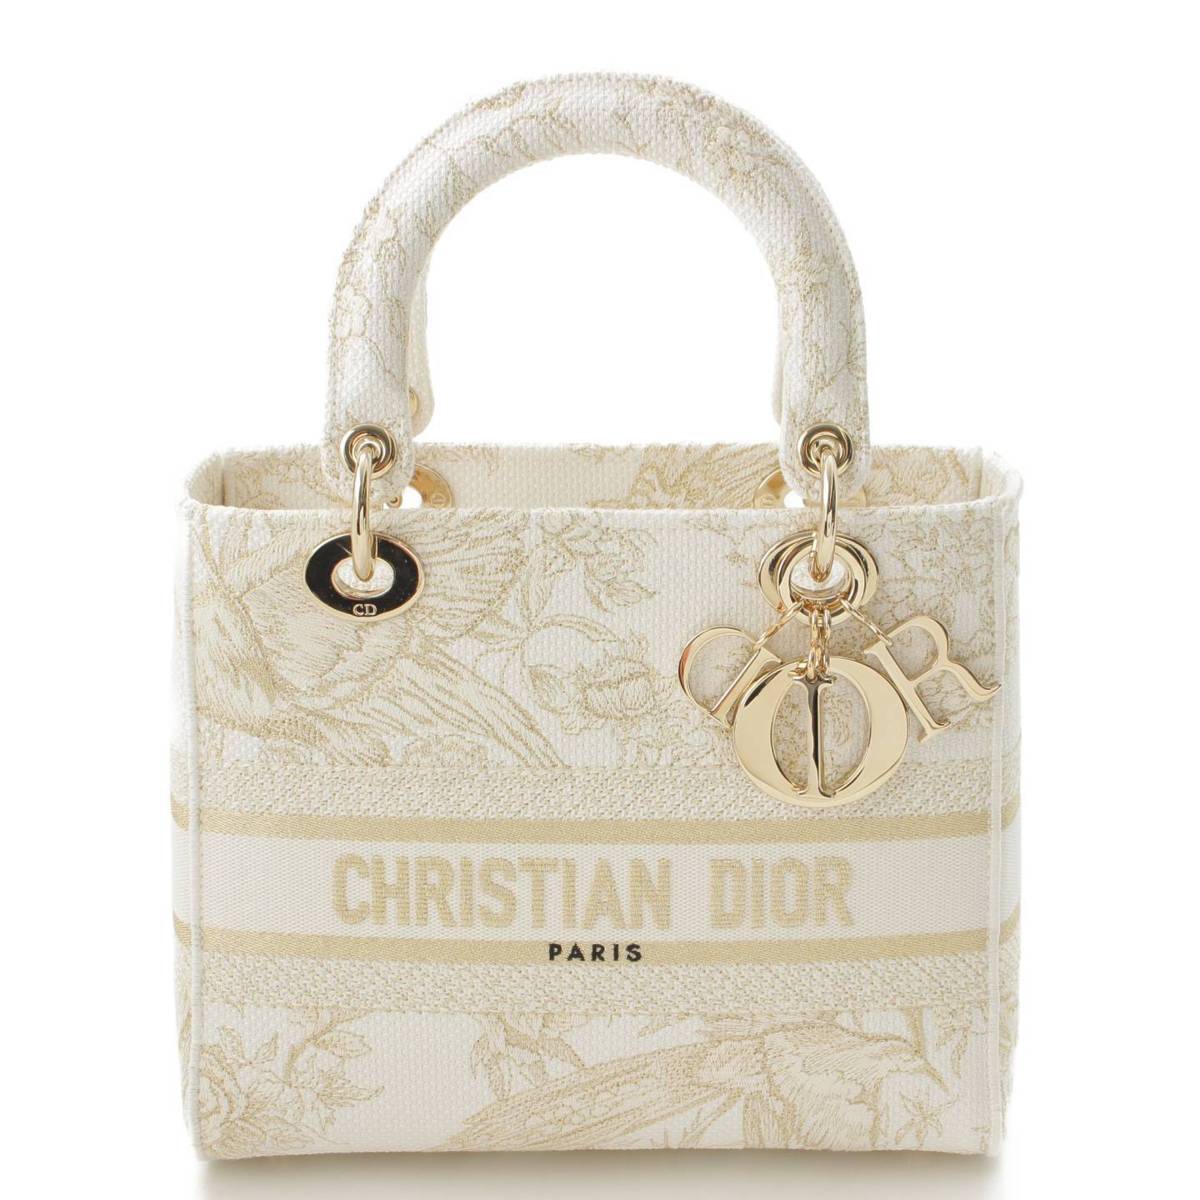 ◆Dior保存袋付き◆Christian Dior トートバッグ\r\nトートバッグ